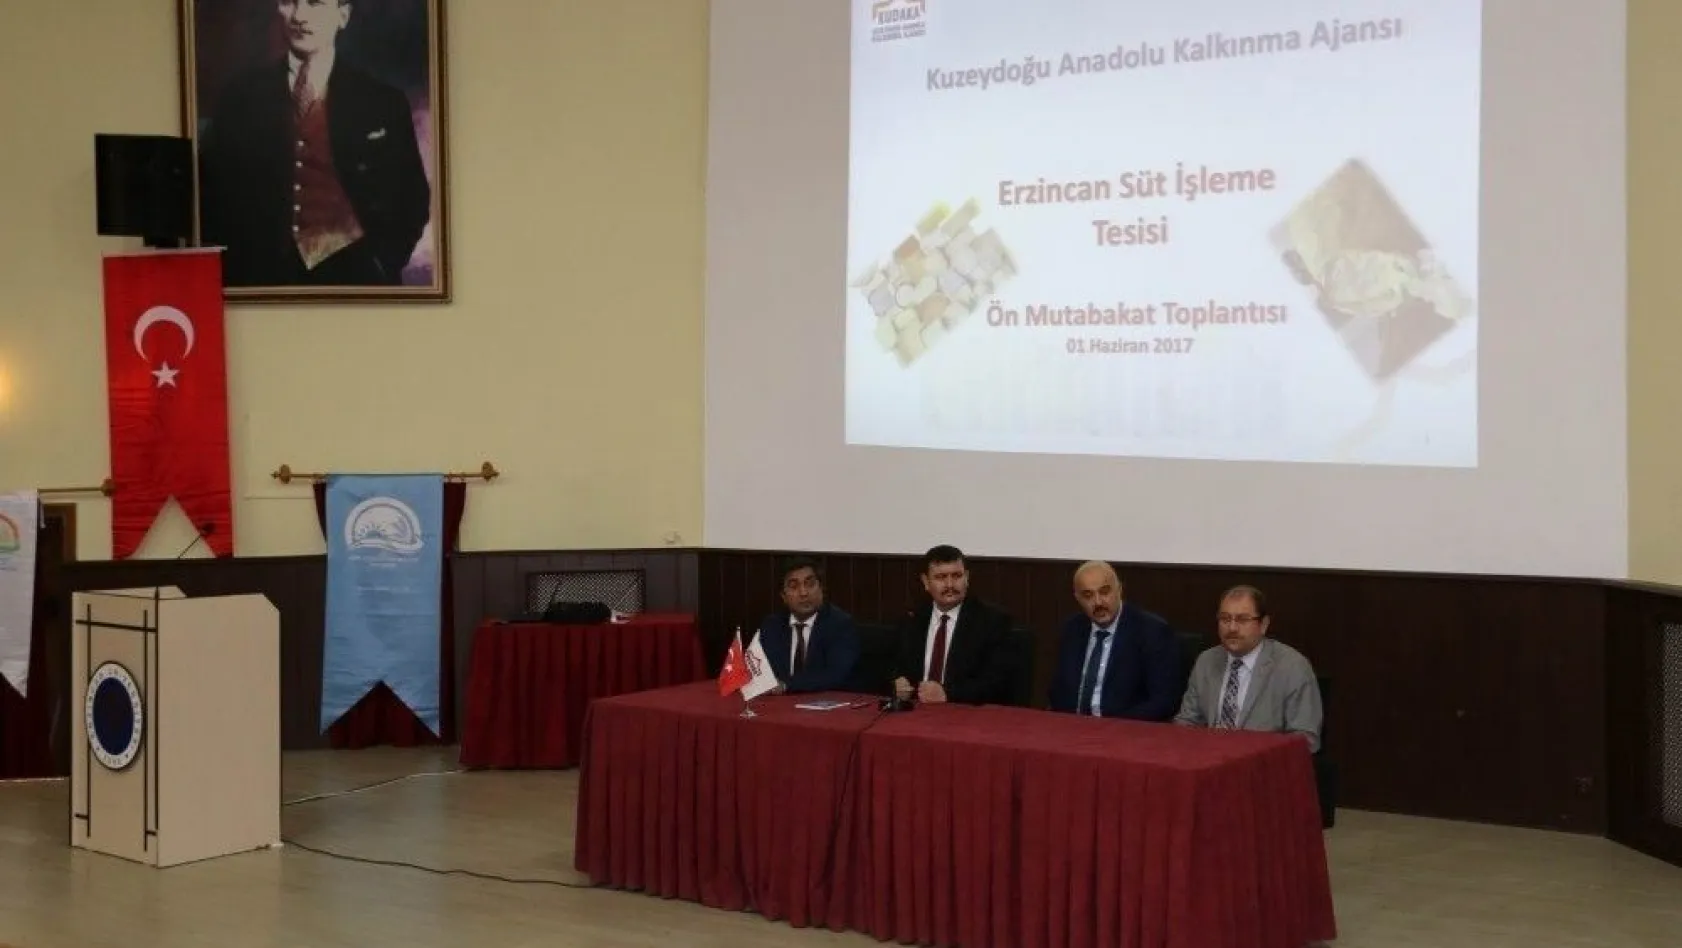 Erzincan'a süt işleme tesisi kurulacak
